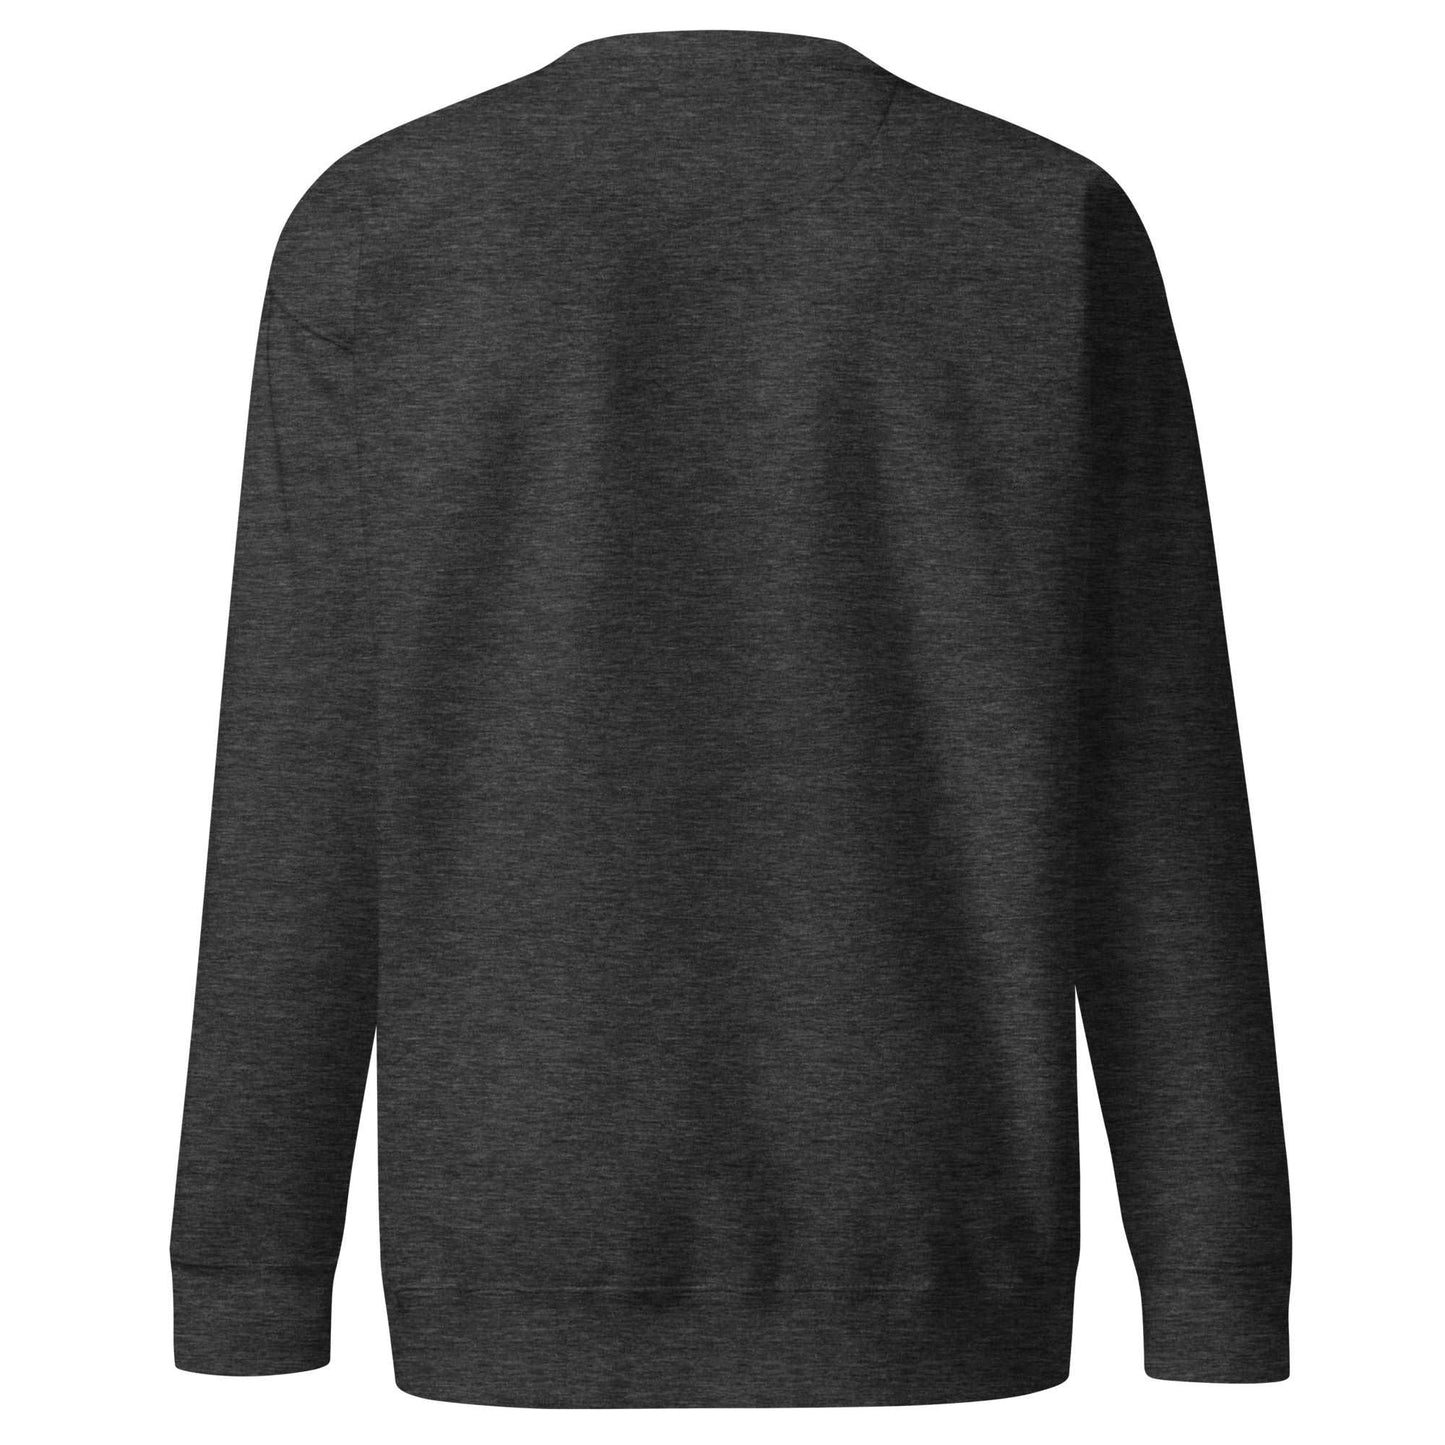 back of sweatshirt Weirdo dark gray by B.Different Clothing independent streetwear brand inspired by street art graffiti